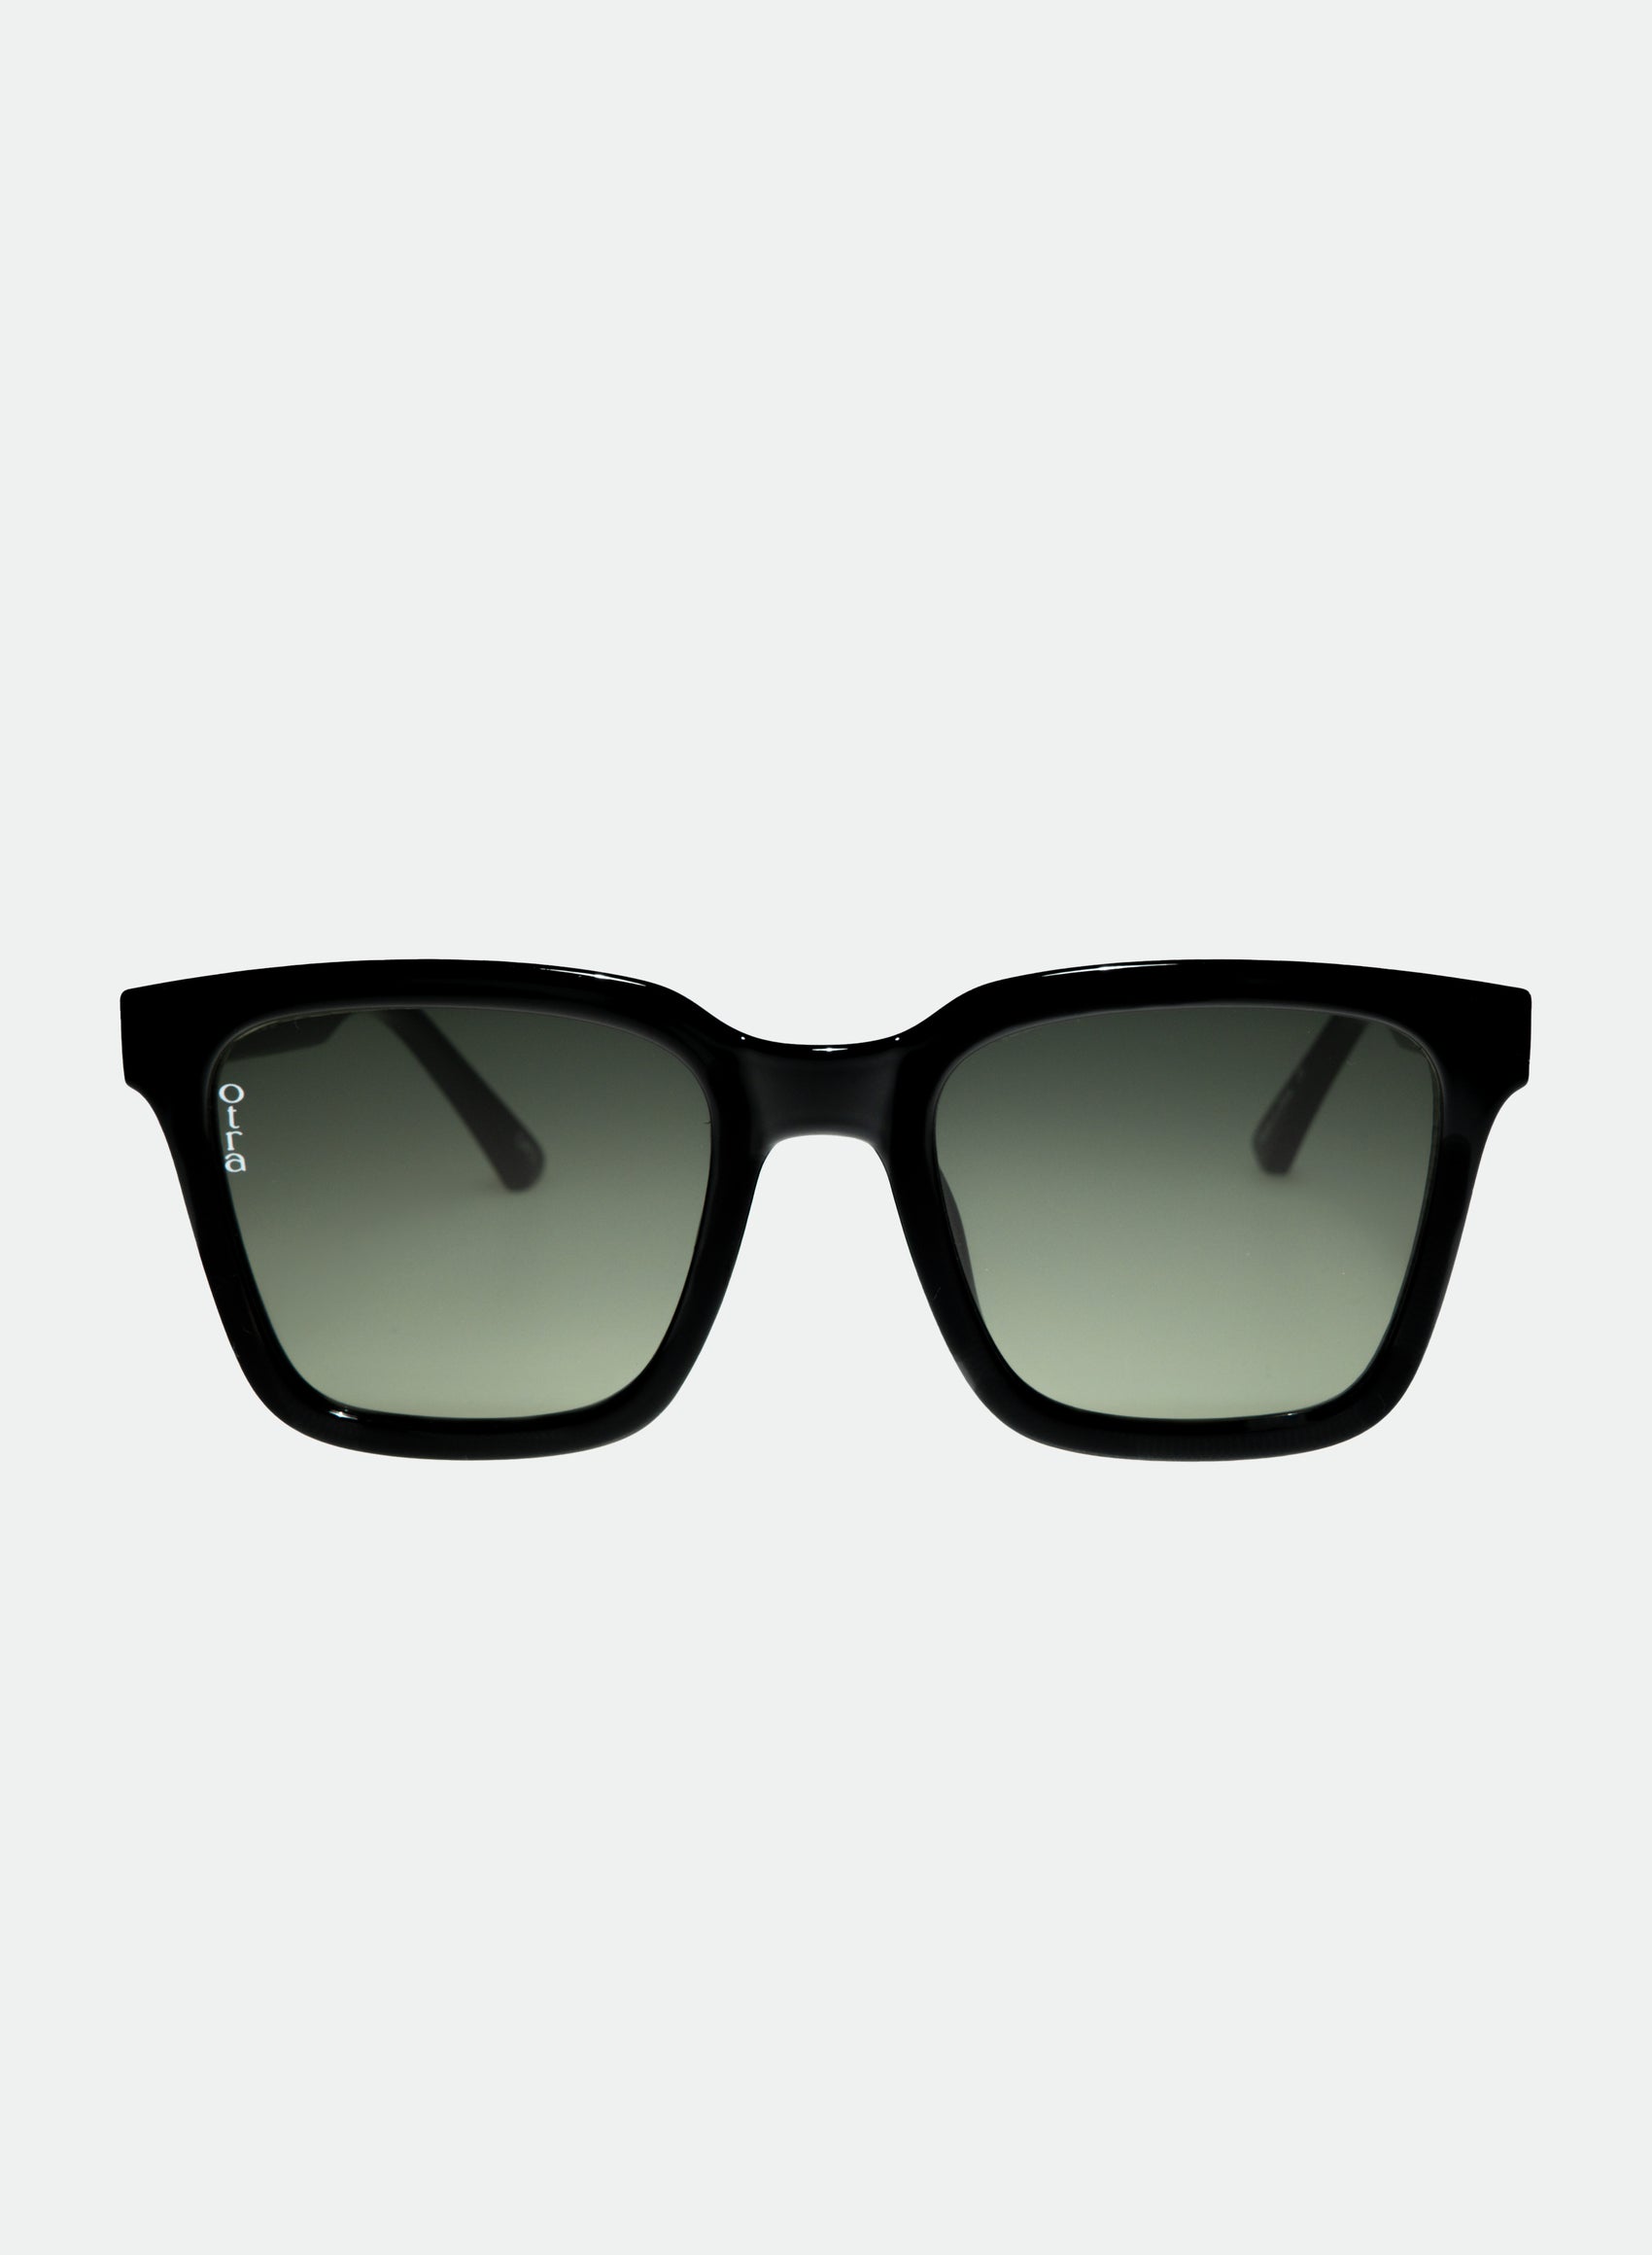 Fyn oversized square sunglasses in black